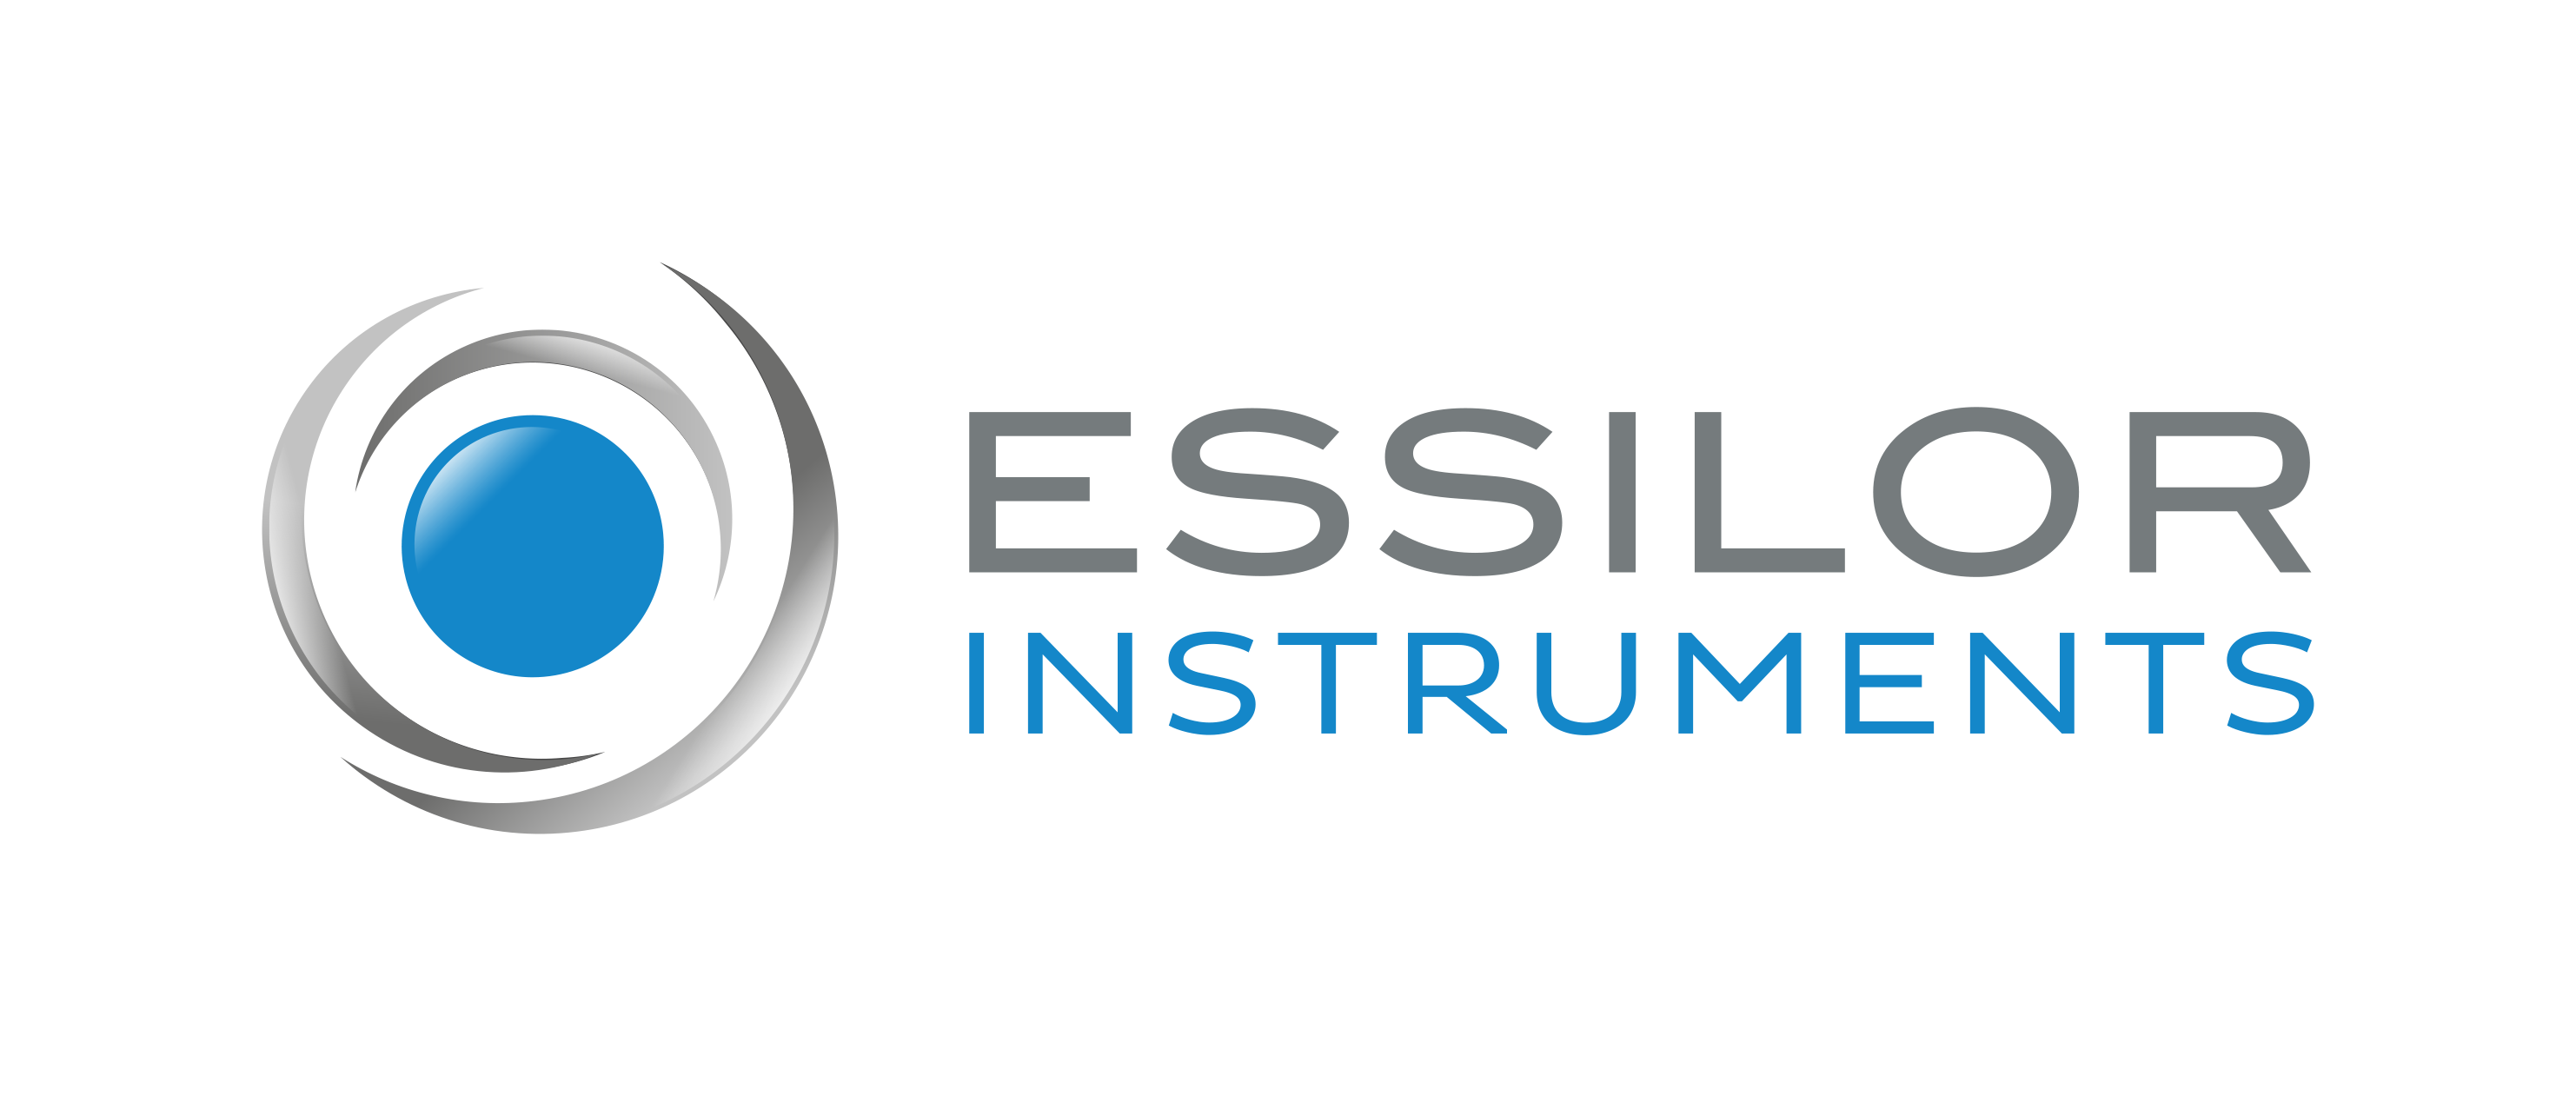 Essilor Instruments